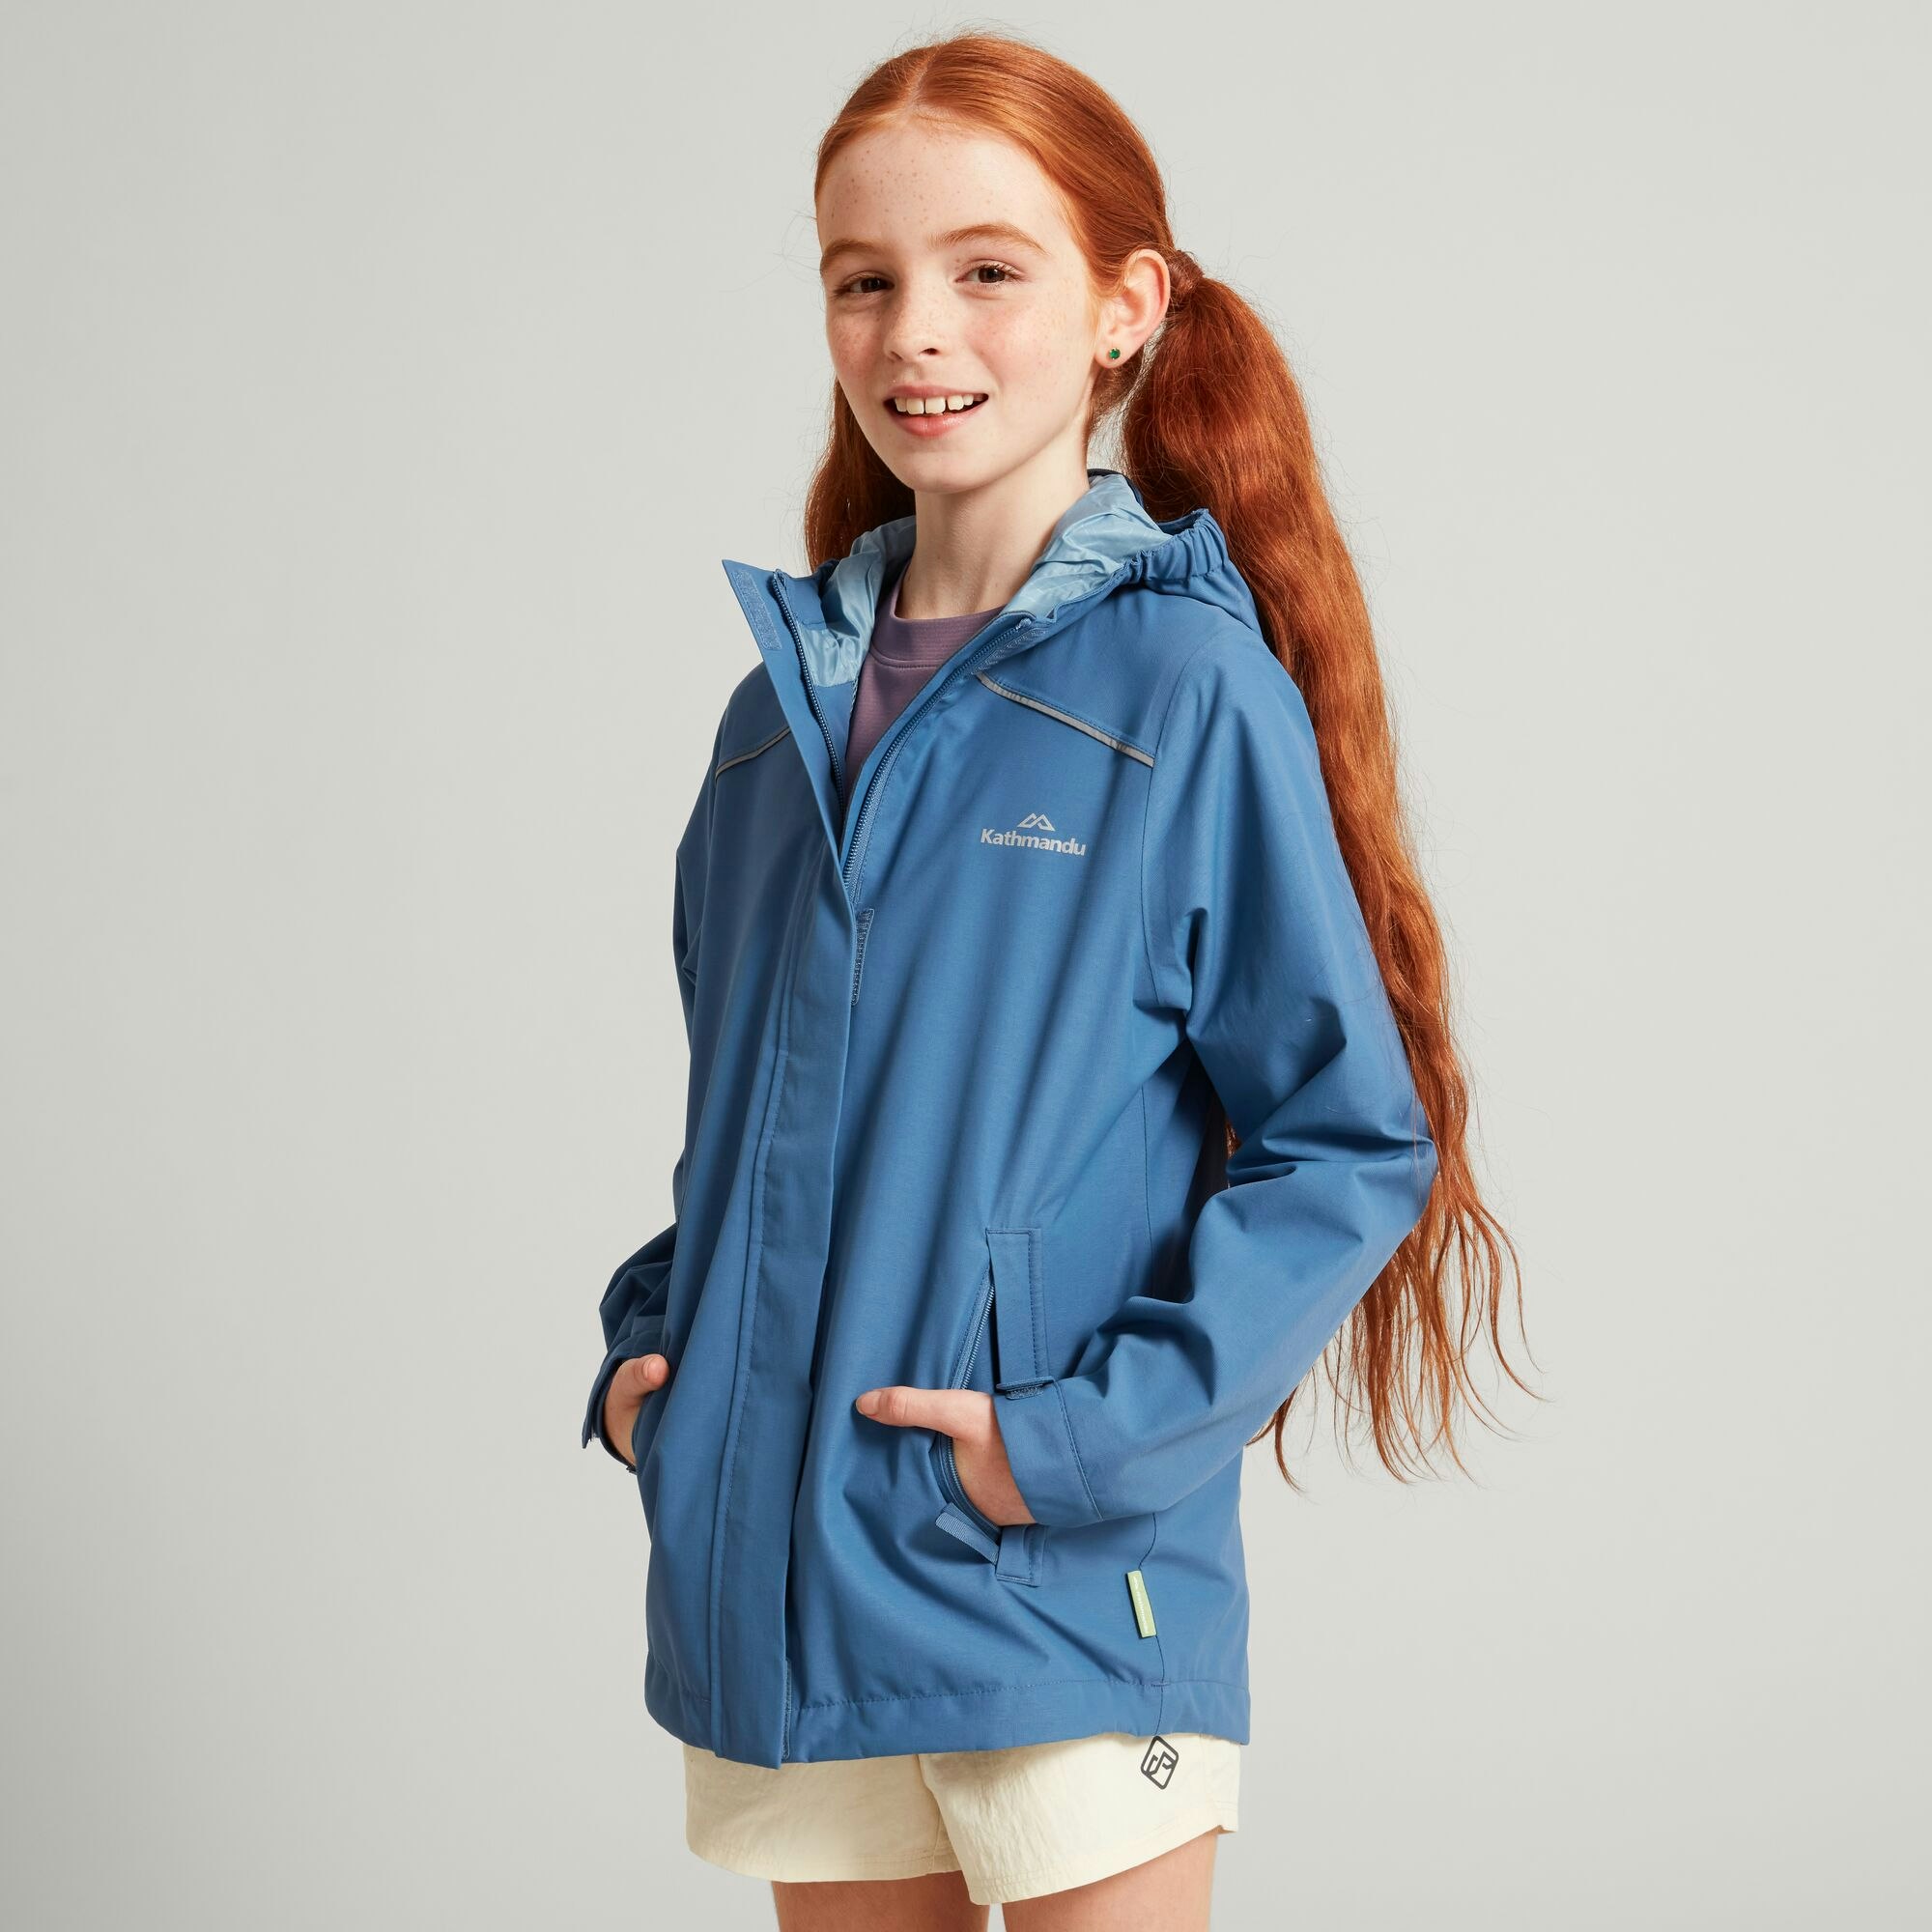 MEK Girls Rain Coat Corto Waterproof Jacket 